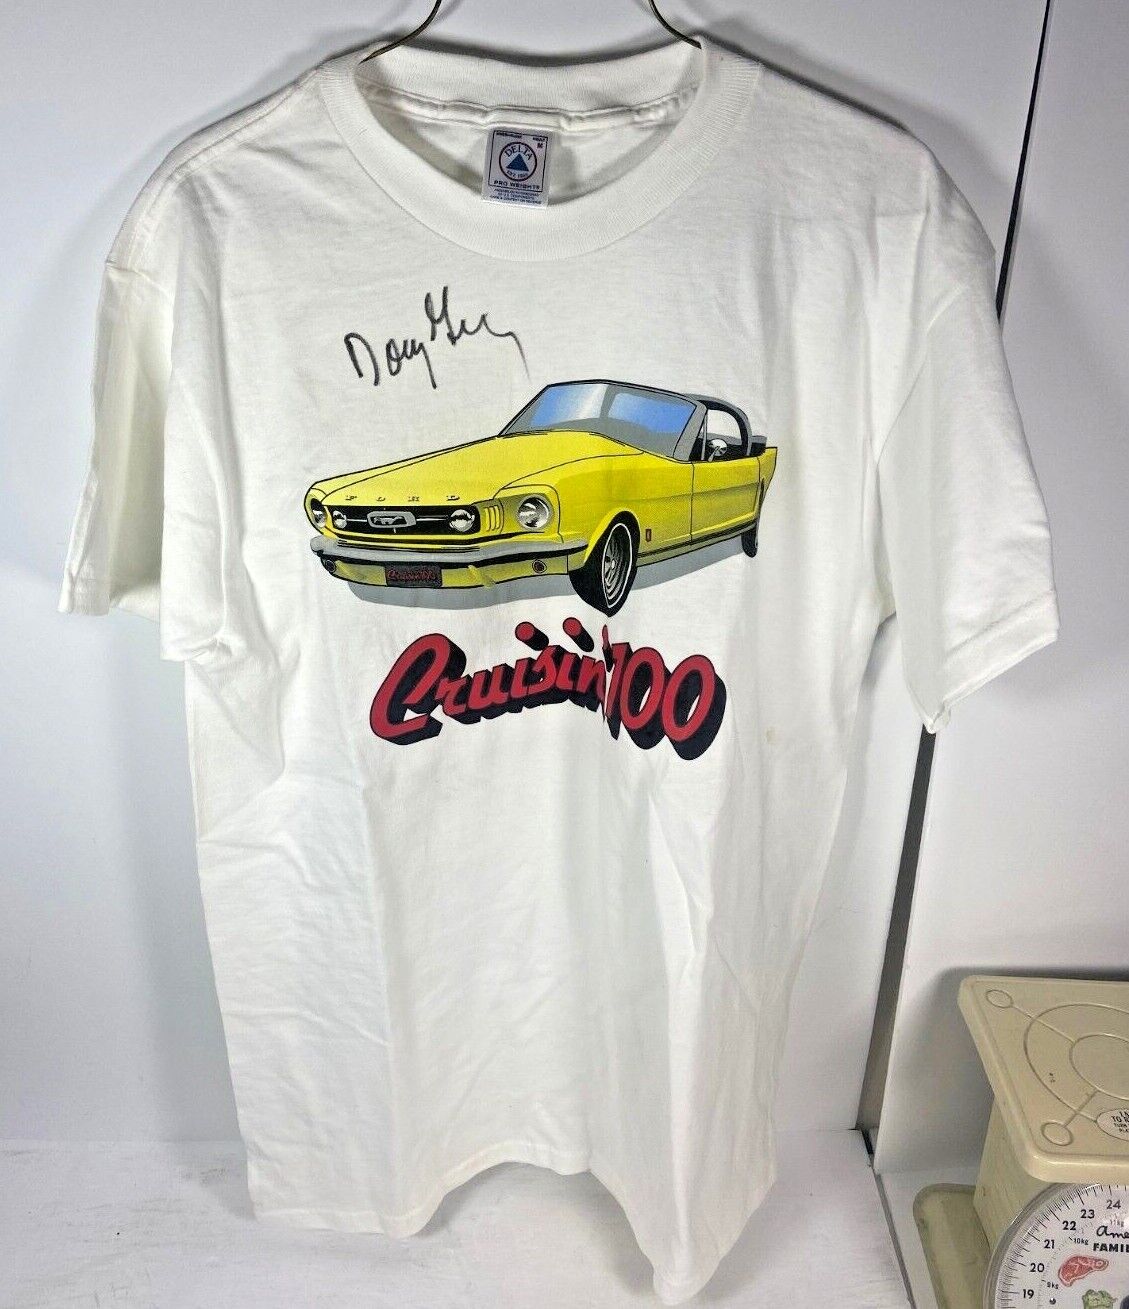 Doug Gray THE MARSHALL TUCKER BAND Signed Autograph T-Shirt Cruisin 100 Adult M